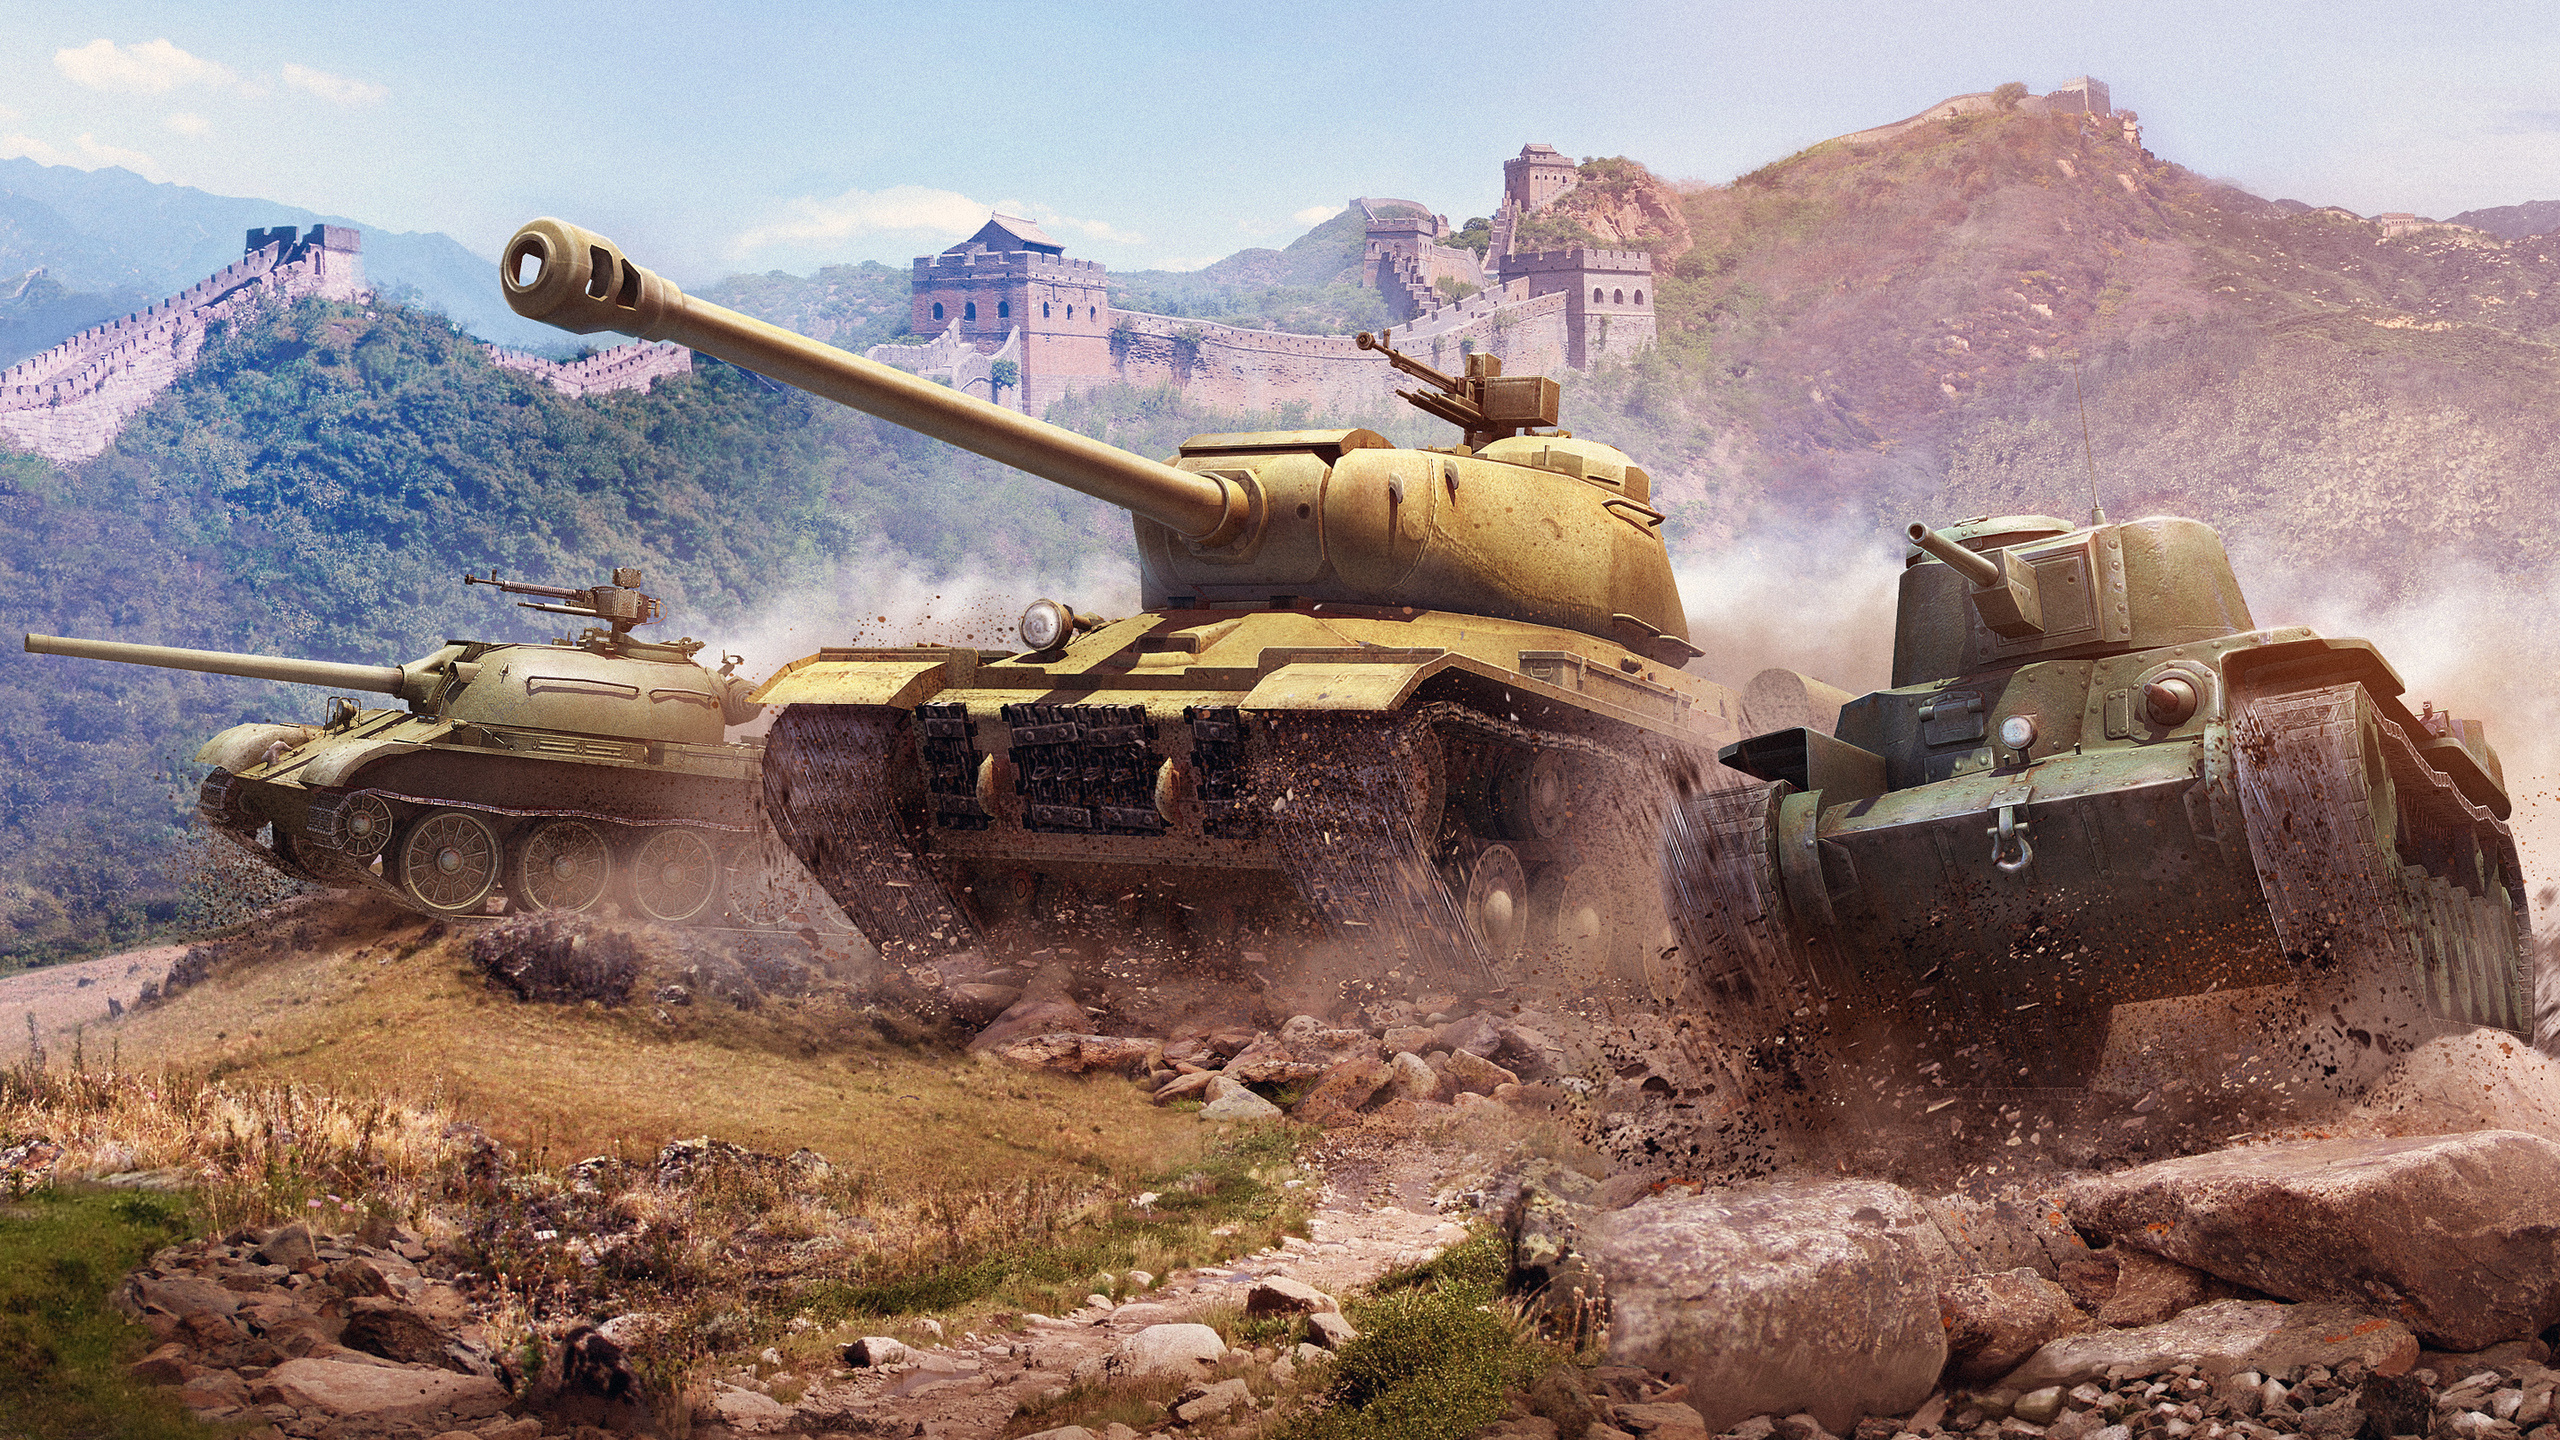 World of Tanks, Chinese tanks, 1440p resolution, Stunning visuals, 2560x1440 HD Desktop